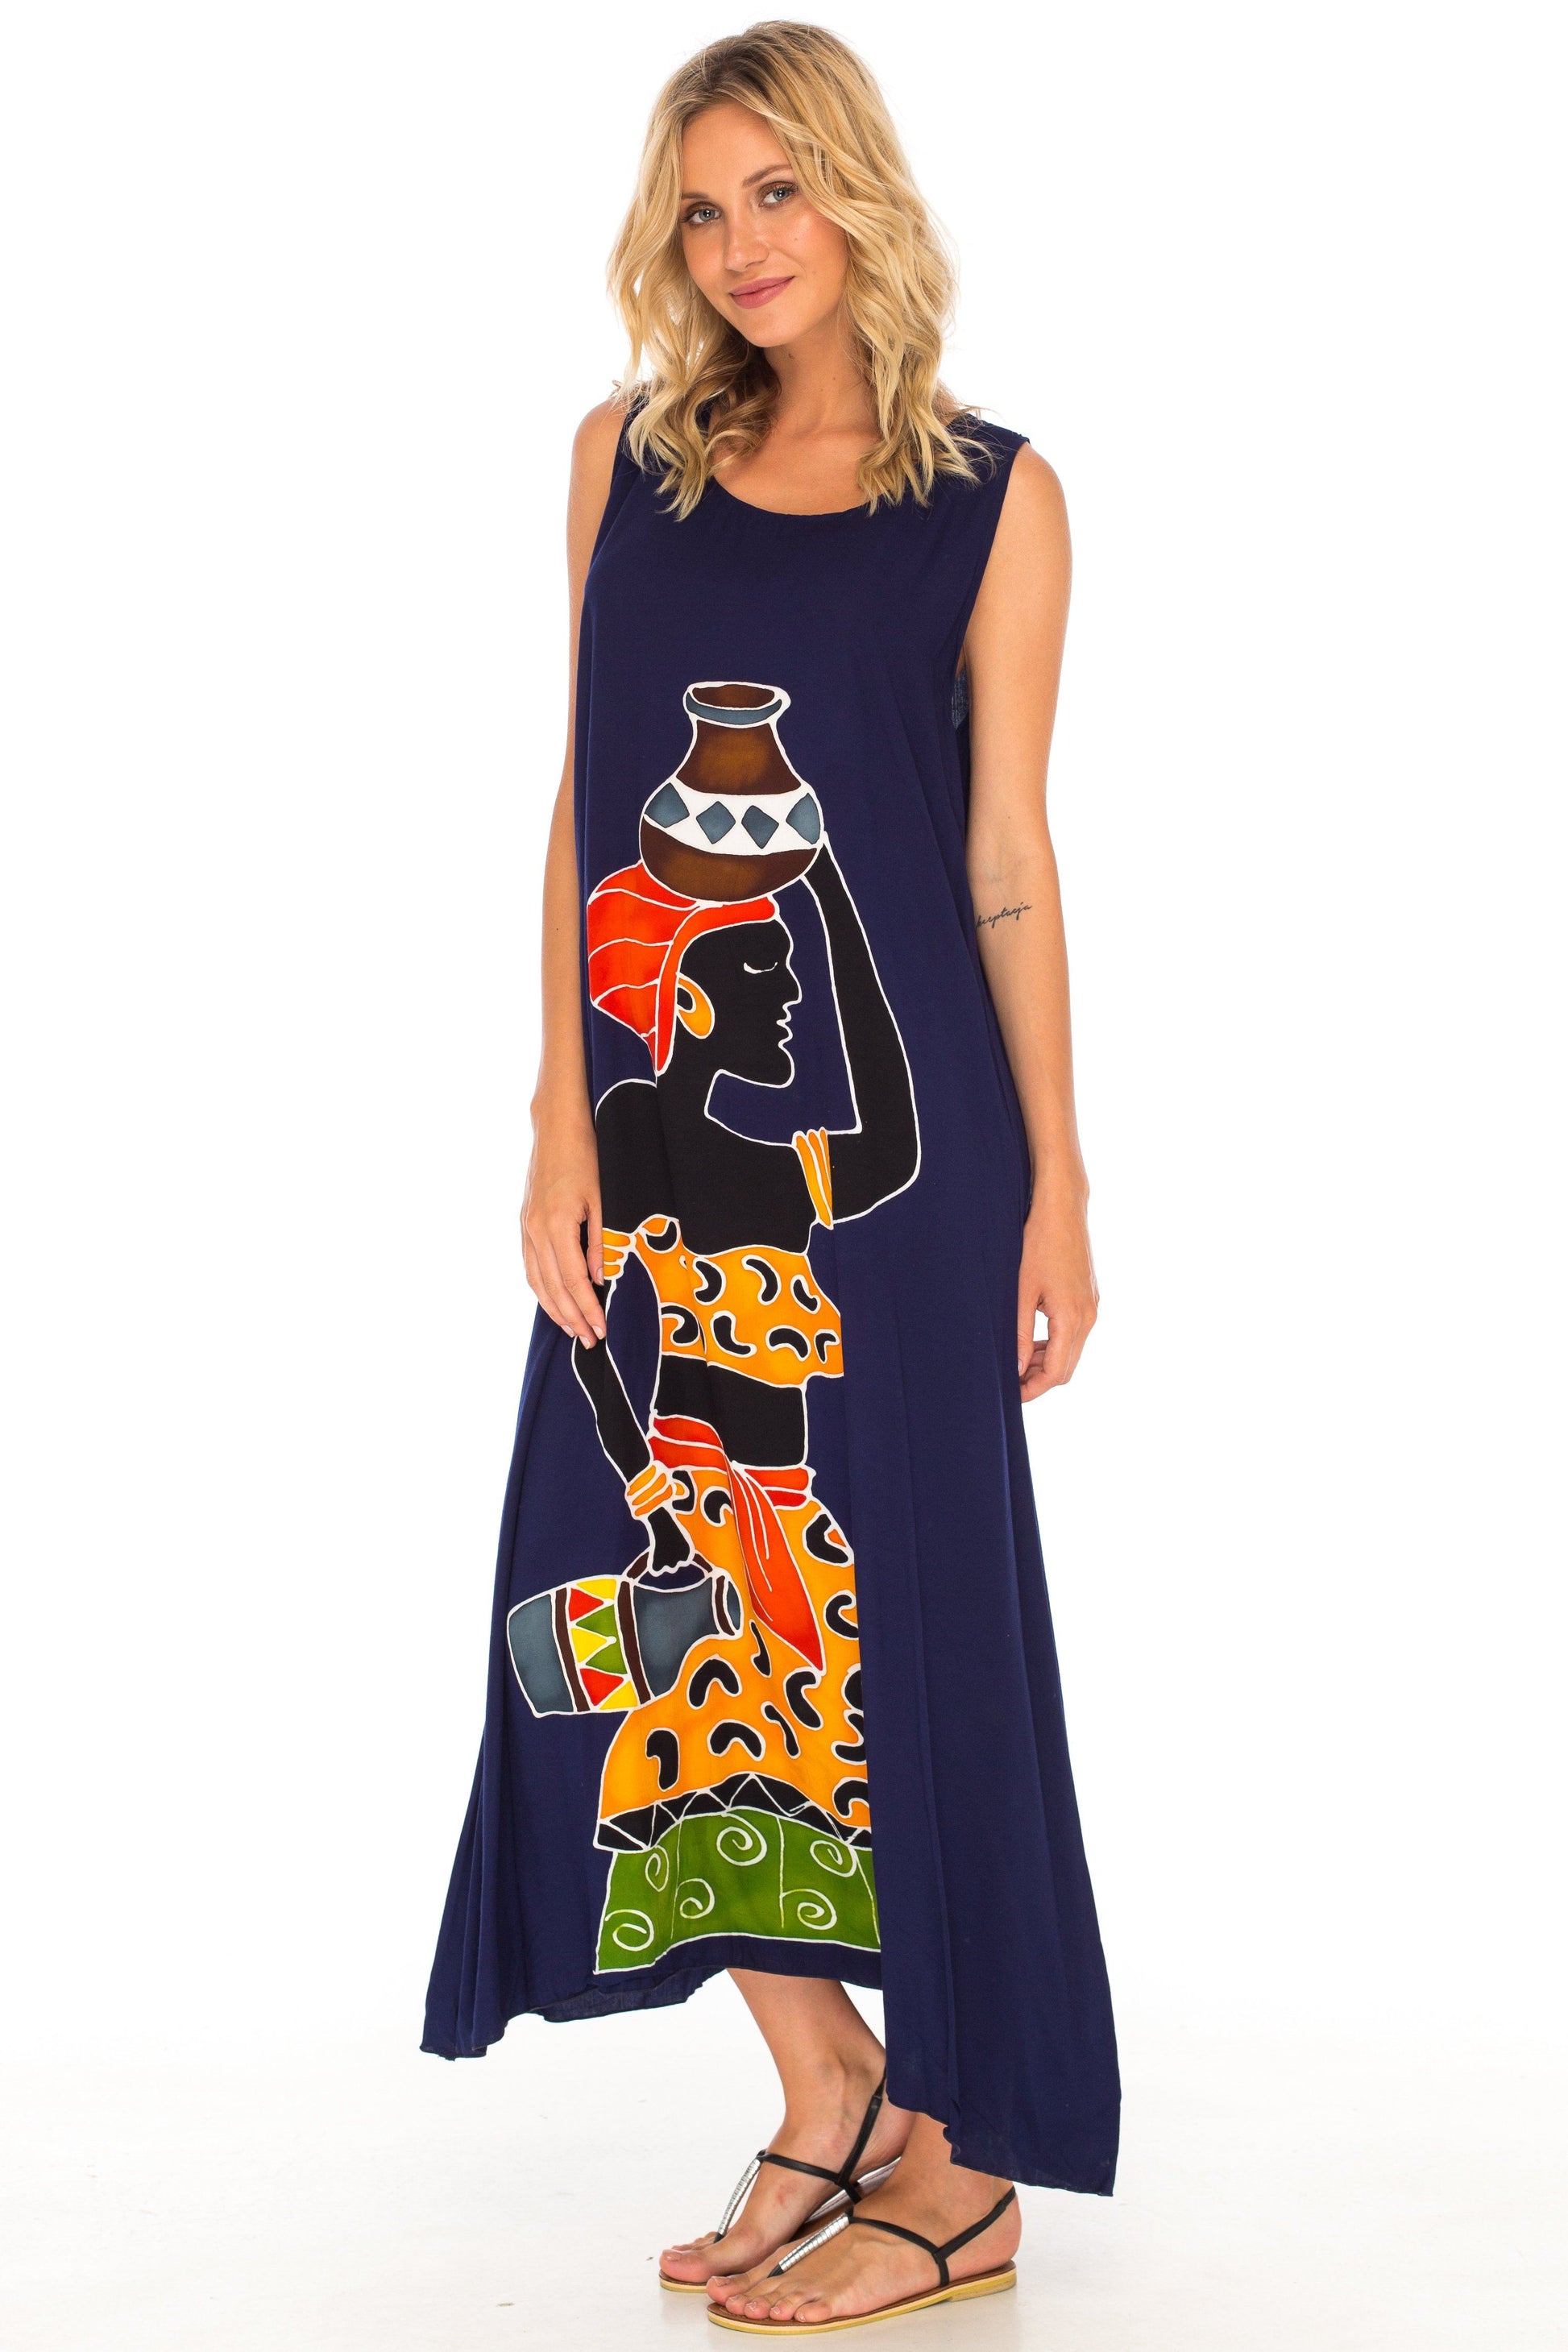 Sleeveless Summer Tank Dress with Hand-painted Tribal Design - Love-ShuShi-navy blue dress-Shu-Shi